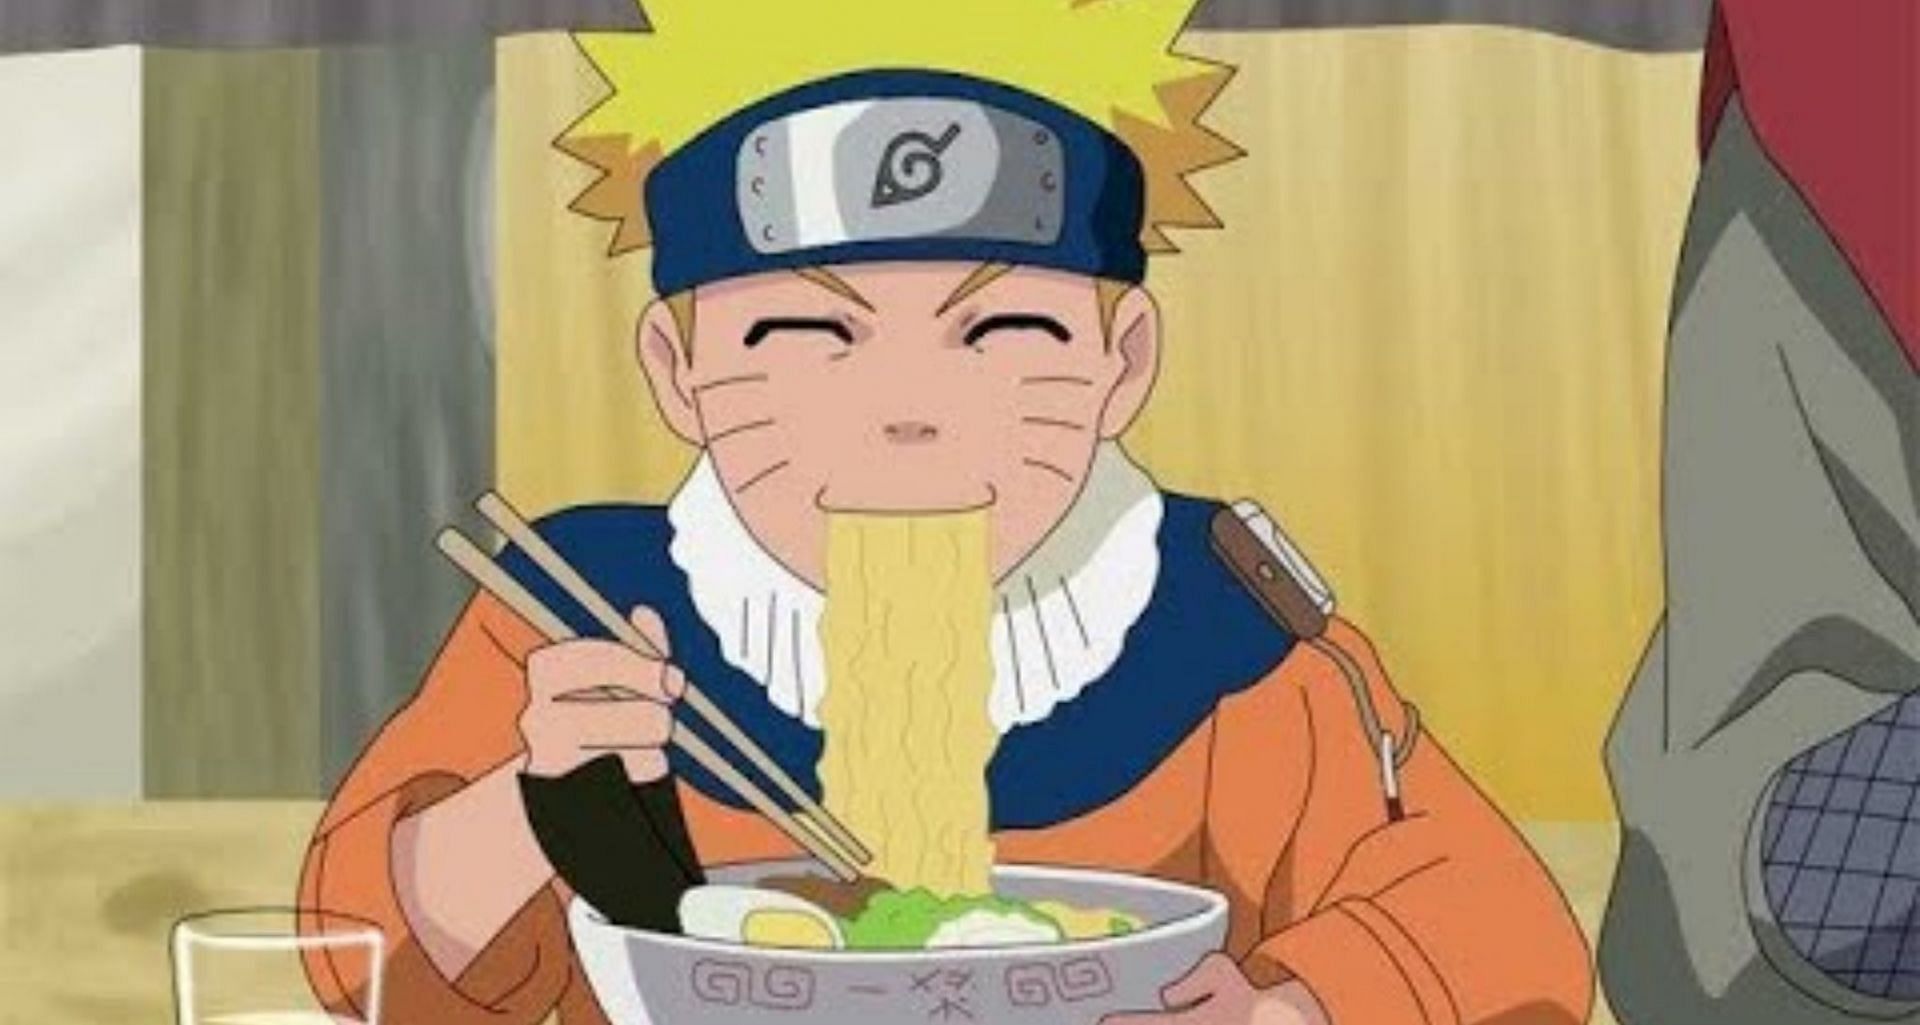 Naruto with his bowl of ramen (Image via Studio Pierrot)